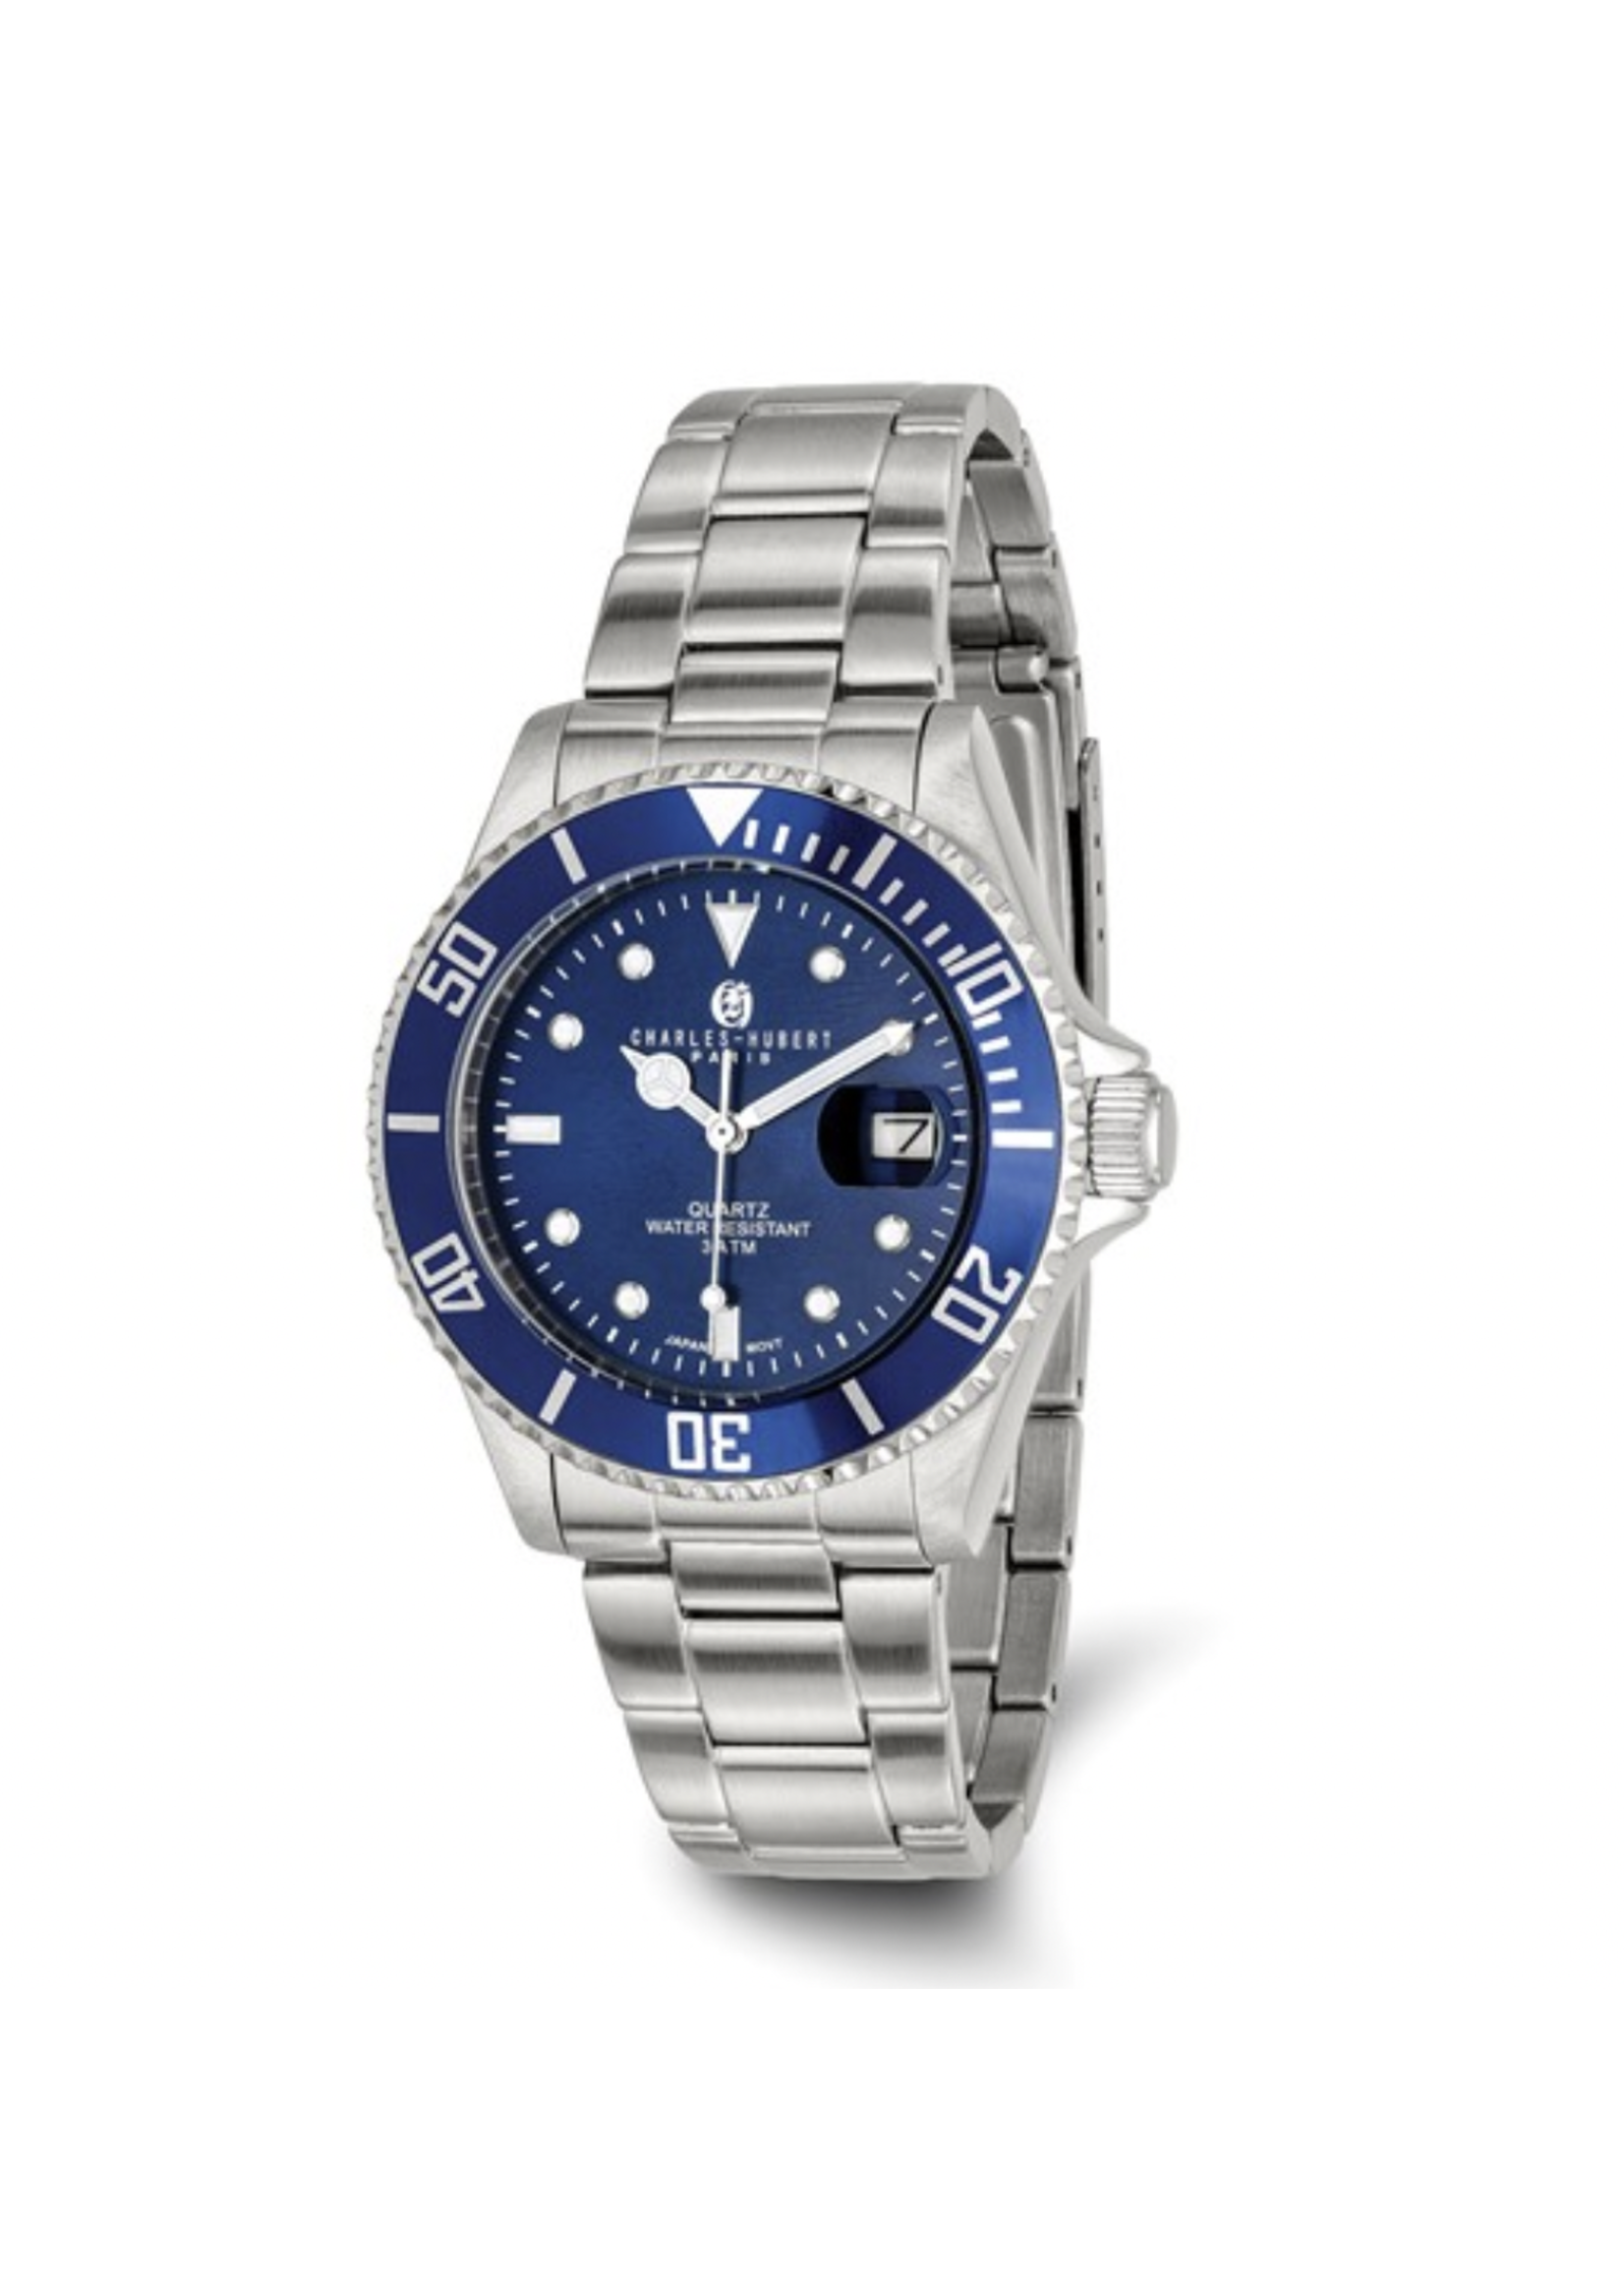 Charles Hubert Stainless Steel Blue Dial Watch